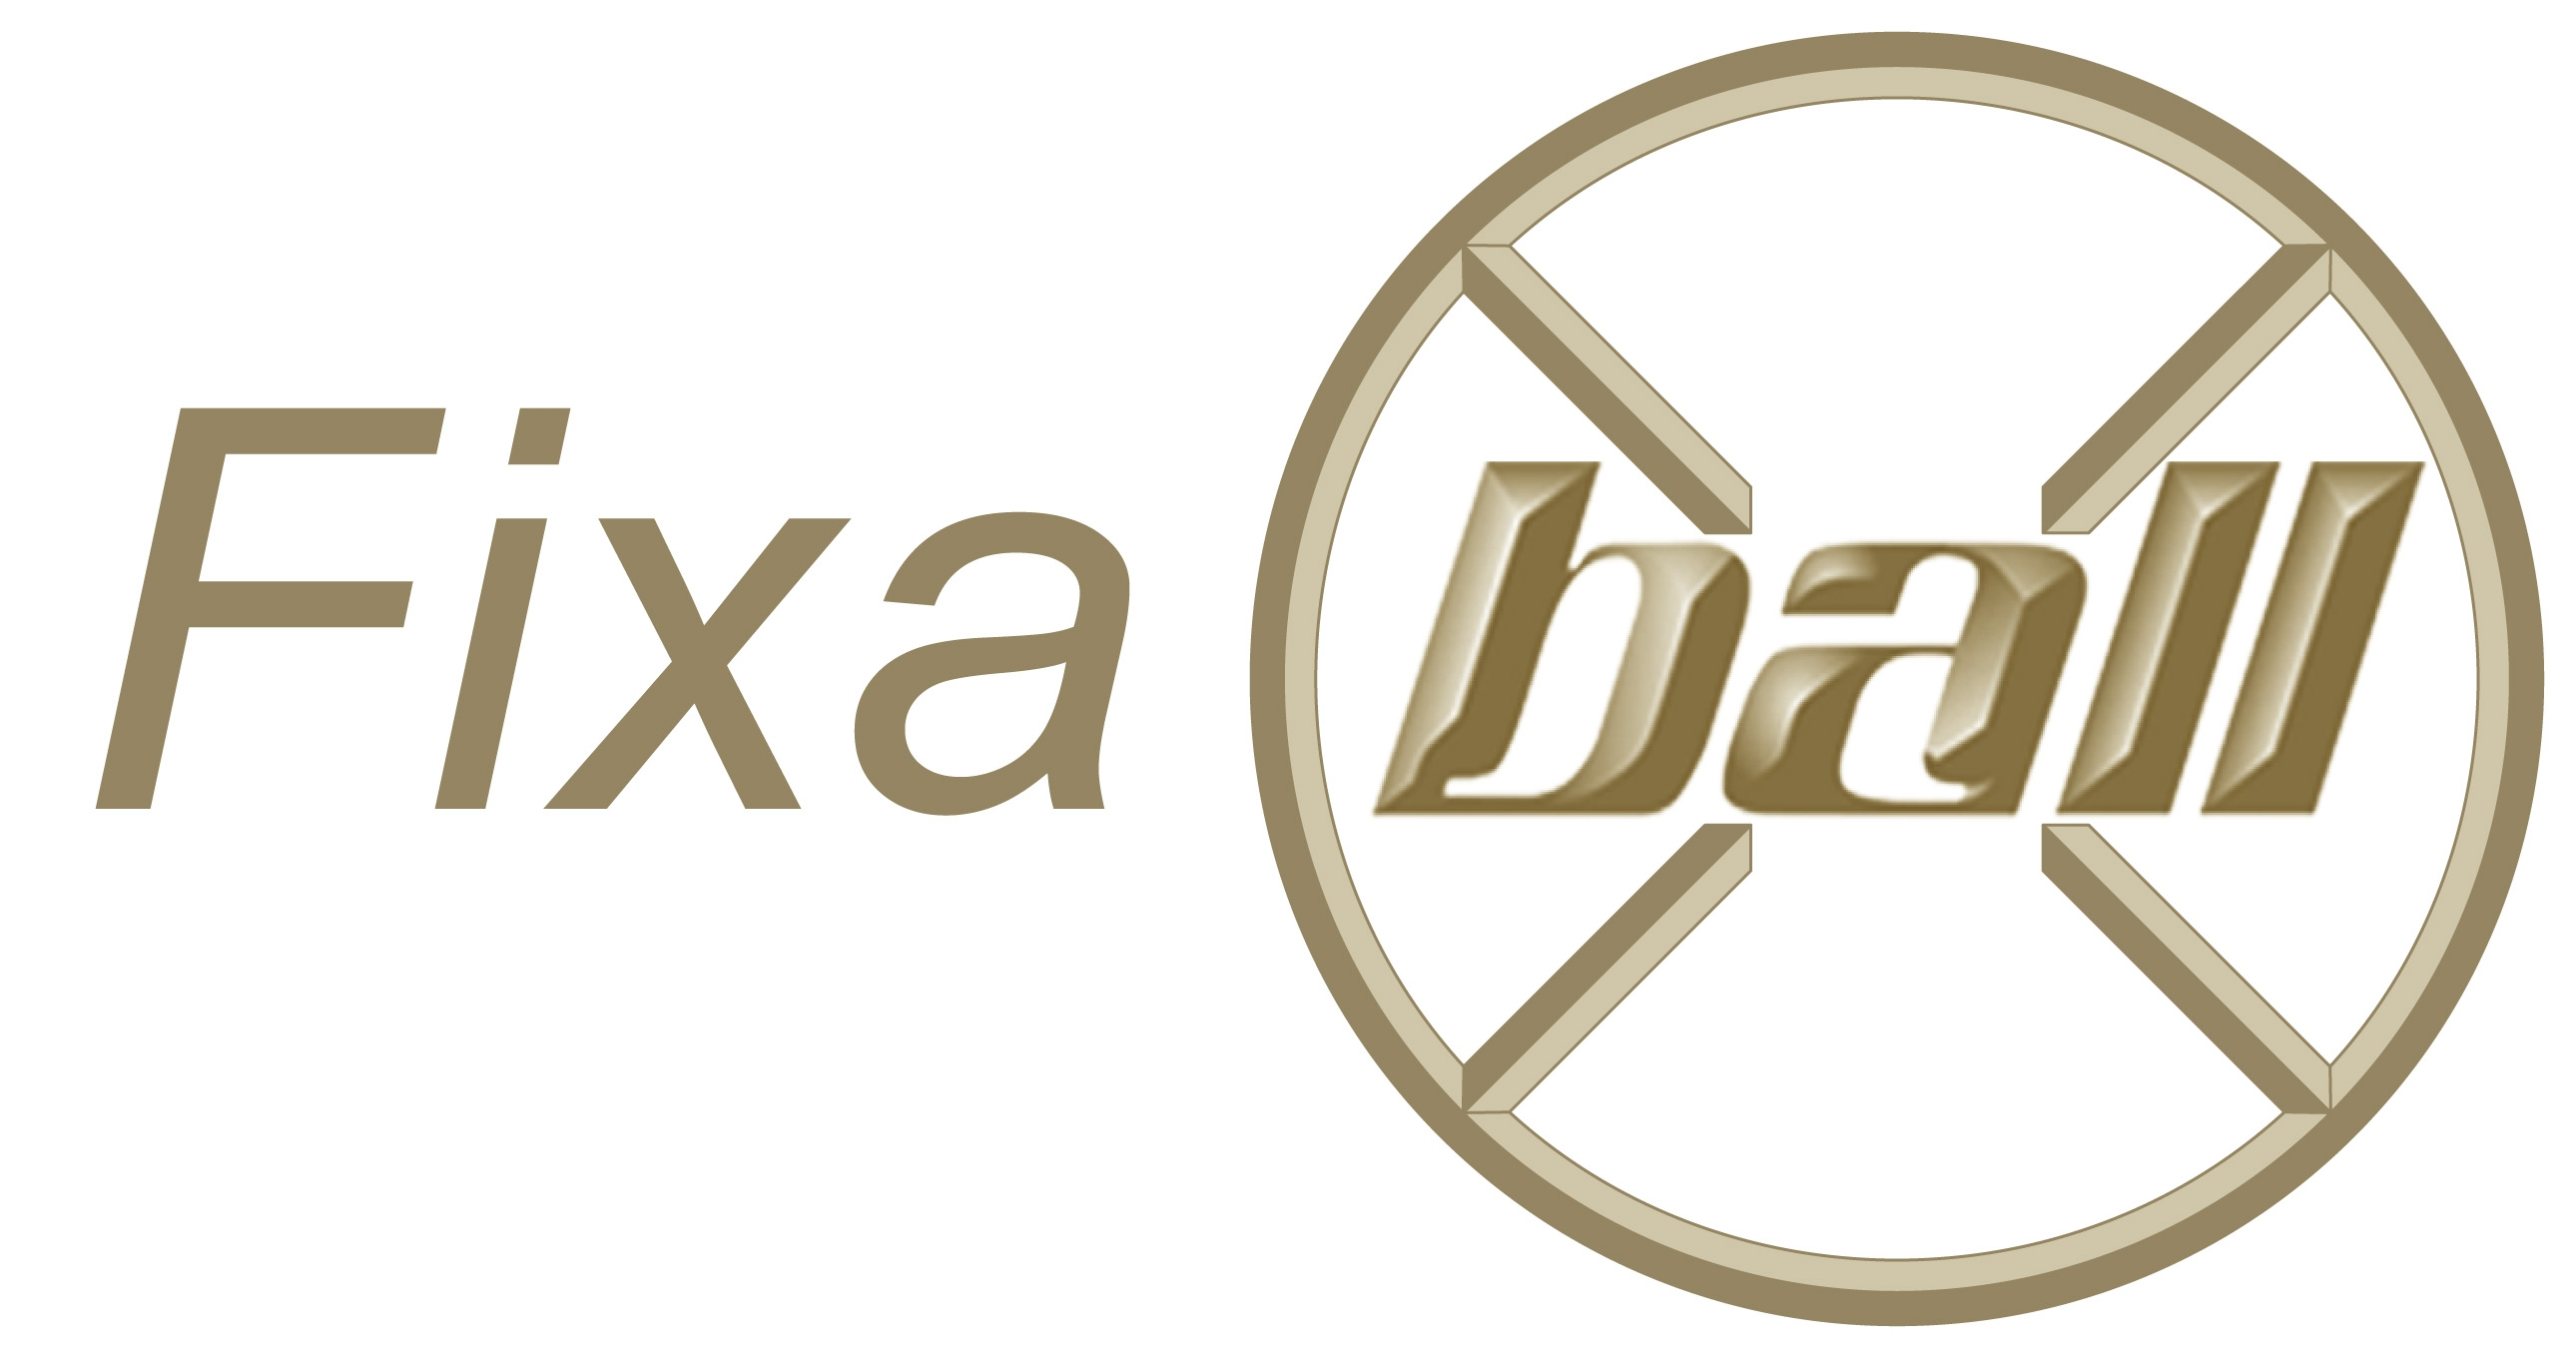 Fixaball Ltd. Fixings and Fasteners UK